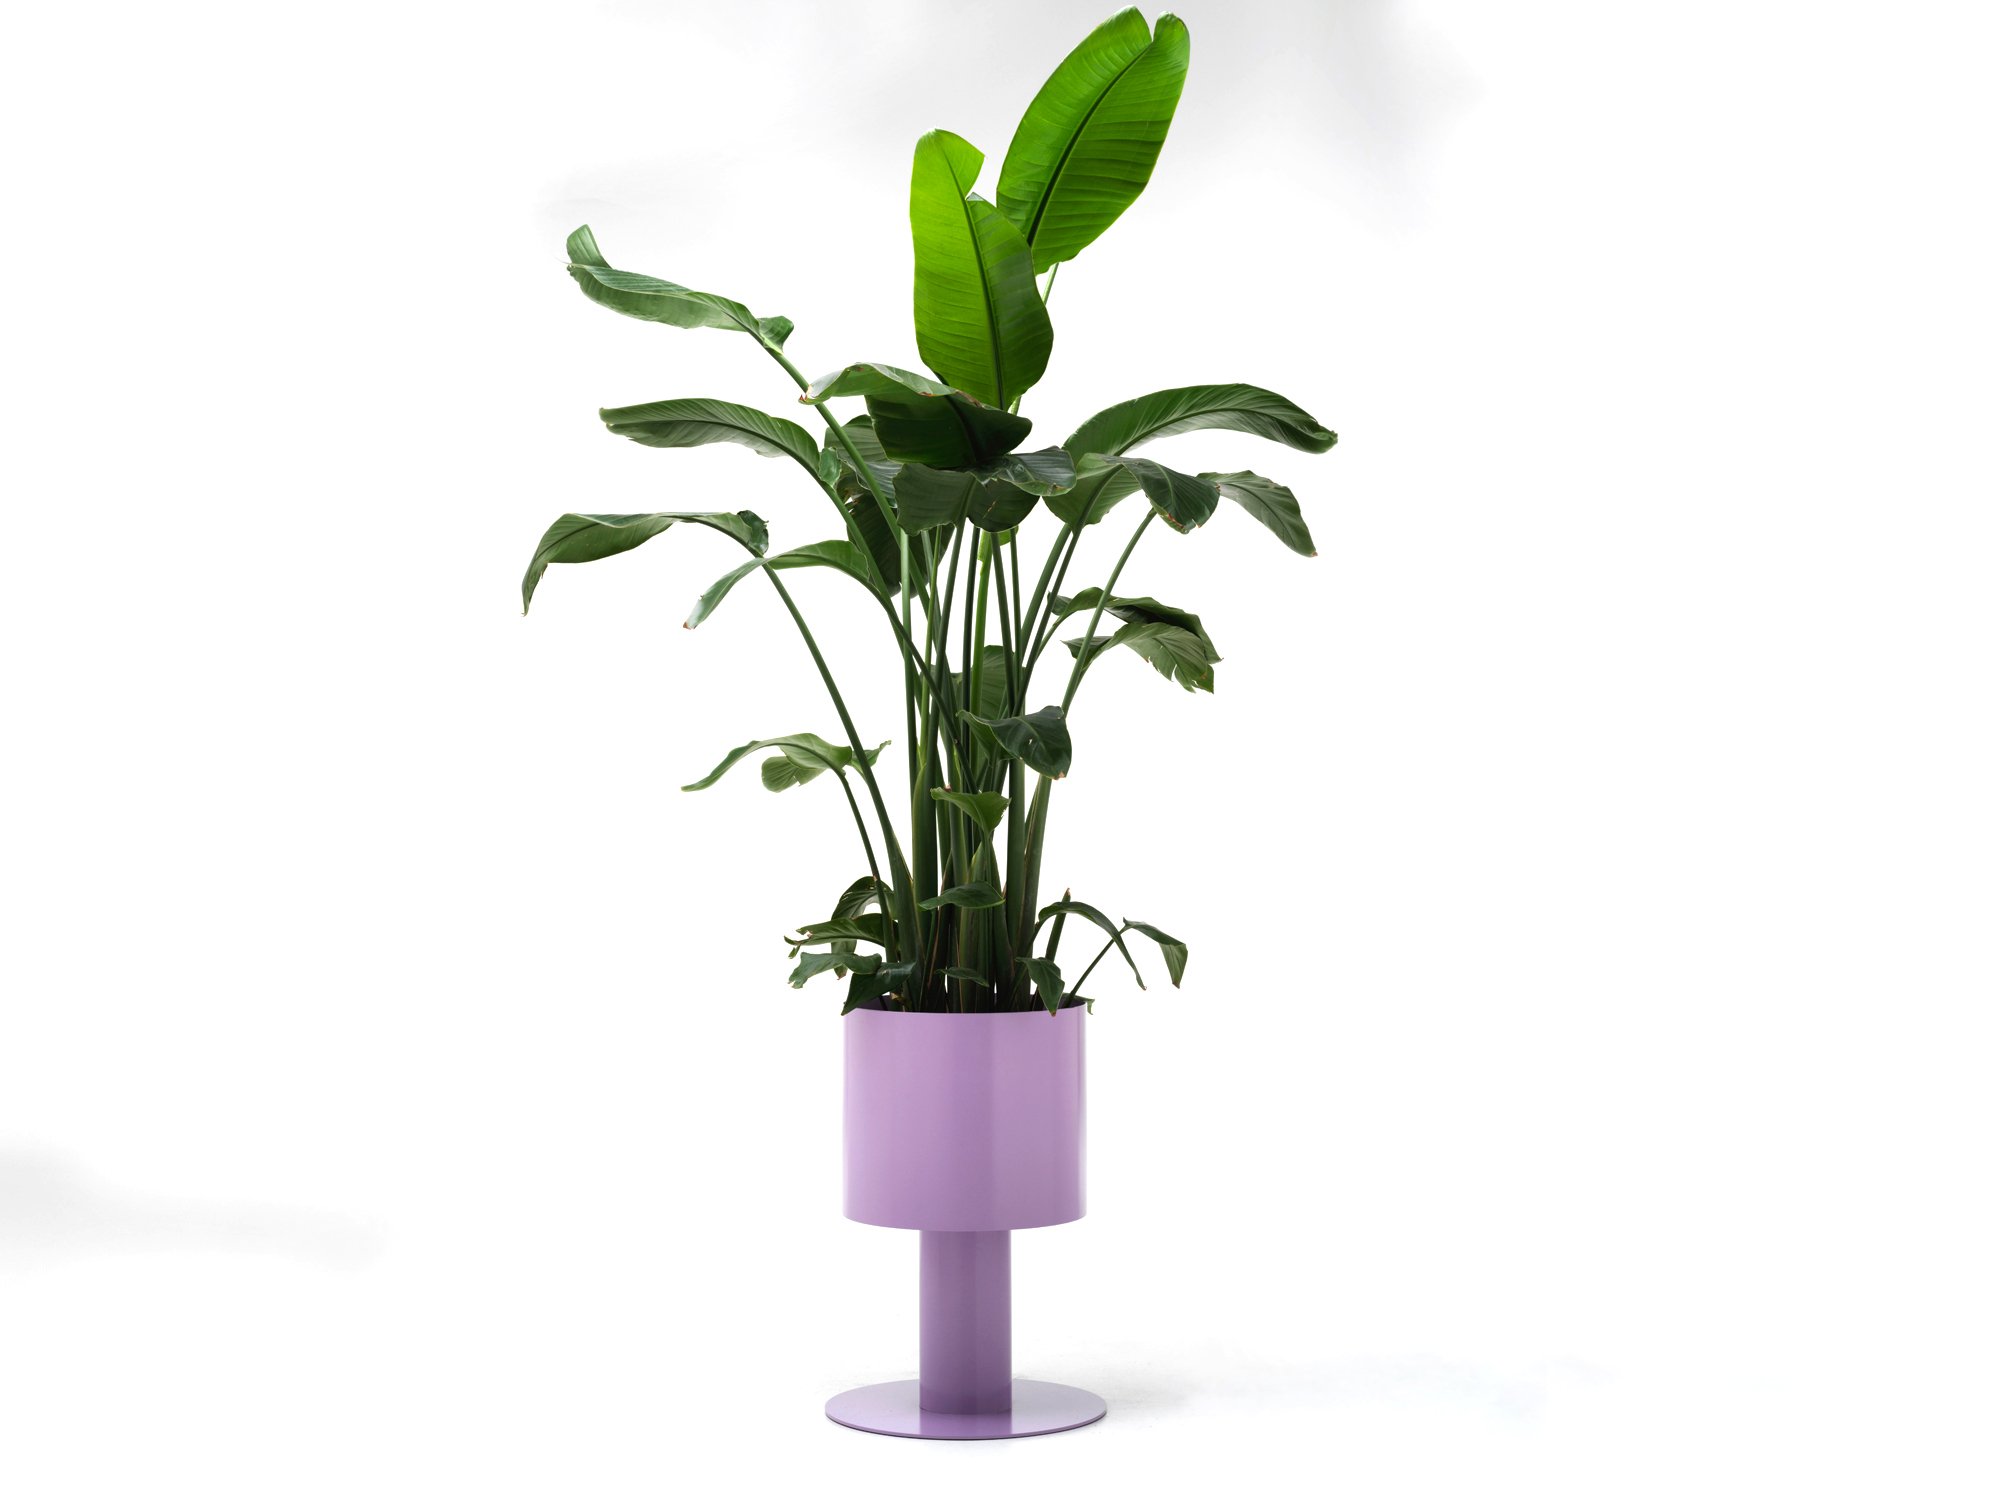 b6-studiociao-ciao-planters-polished-stainlesssteel.jpg